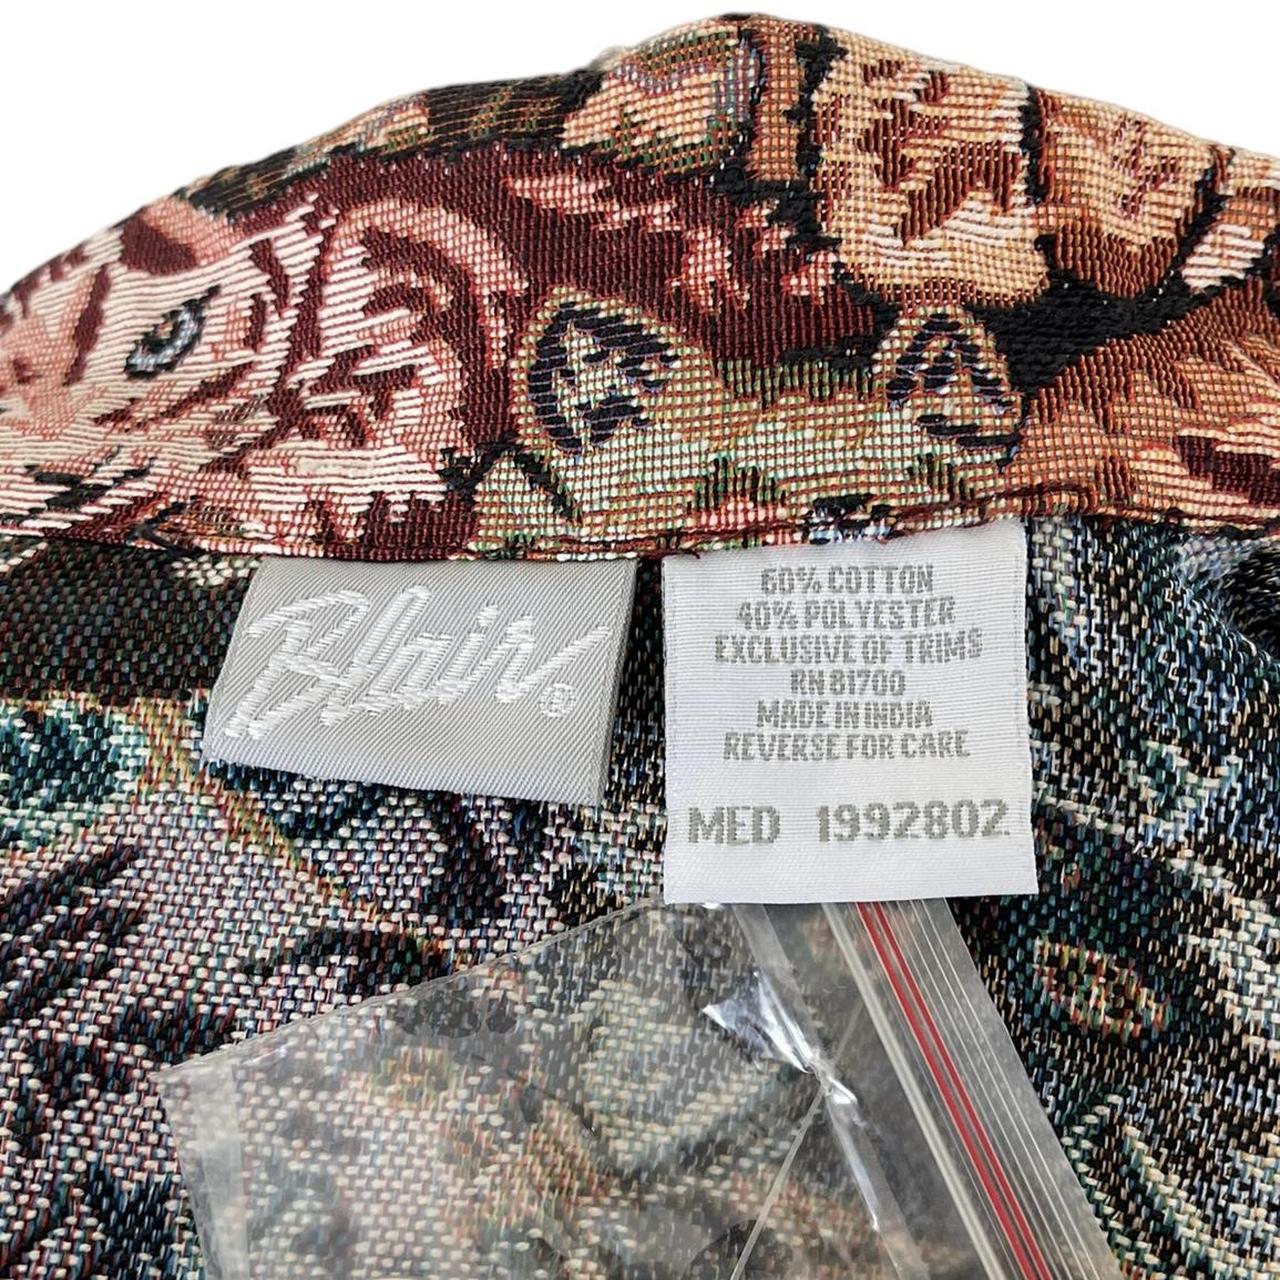 Blair, Jackets & Coats, Vintage Cat Tapestry Jacket